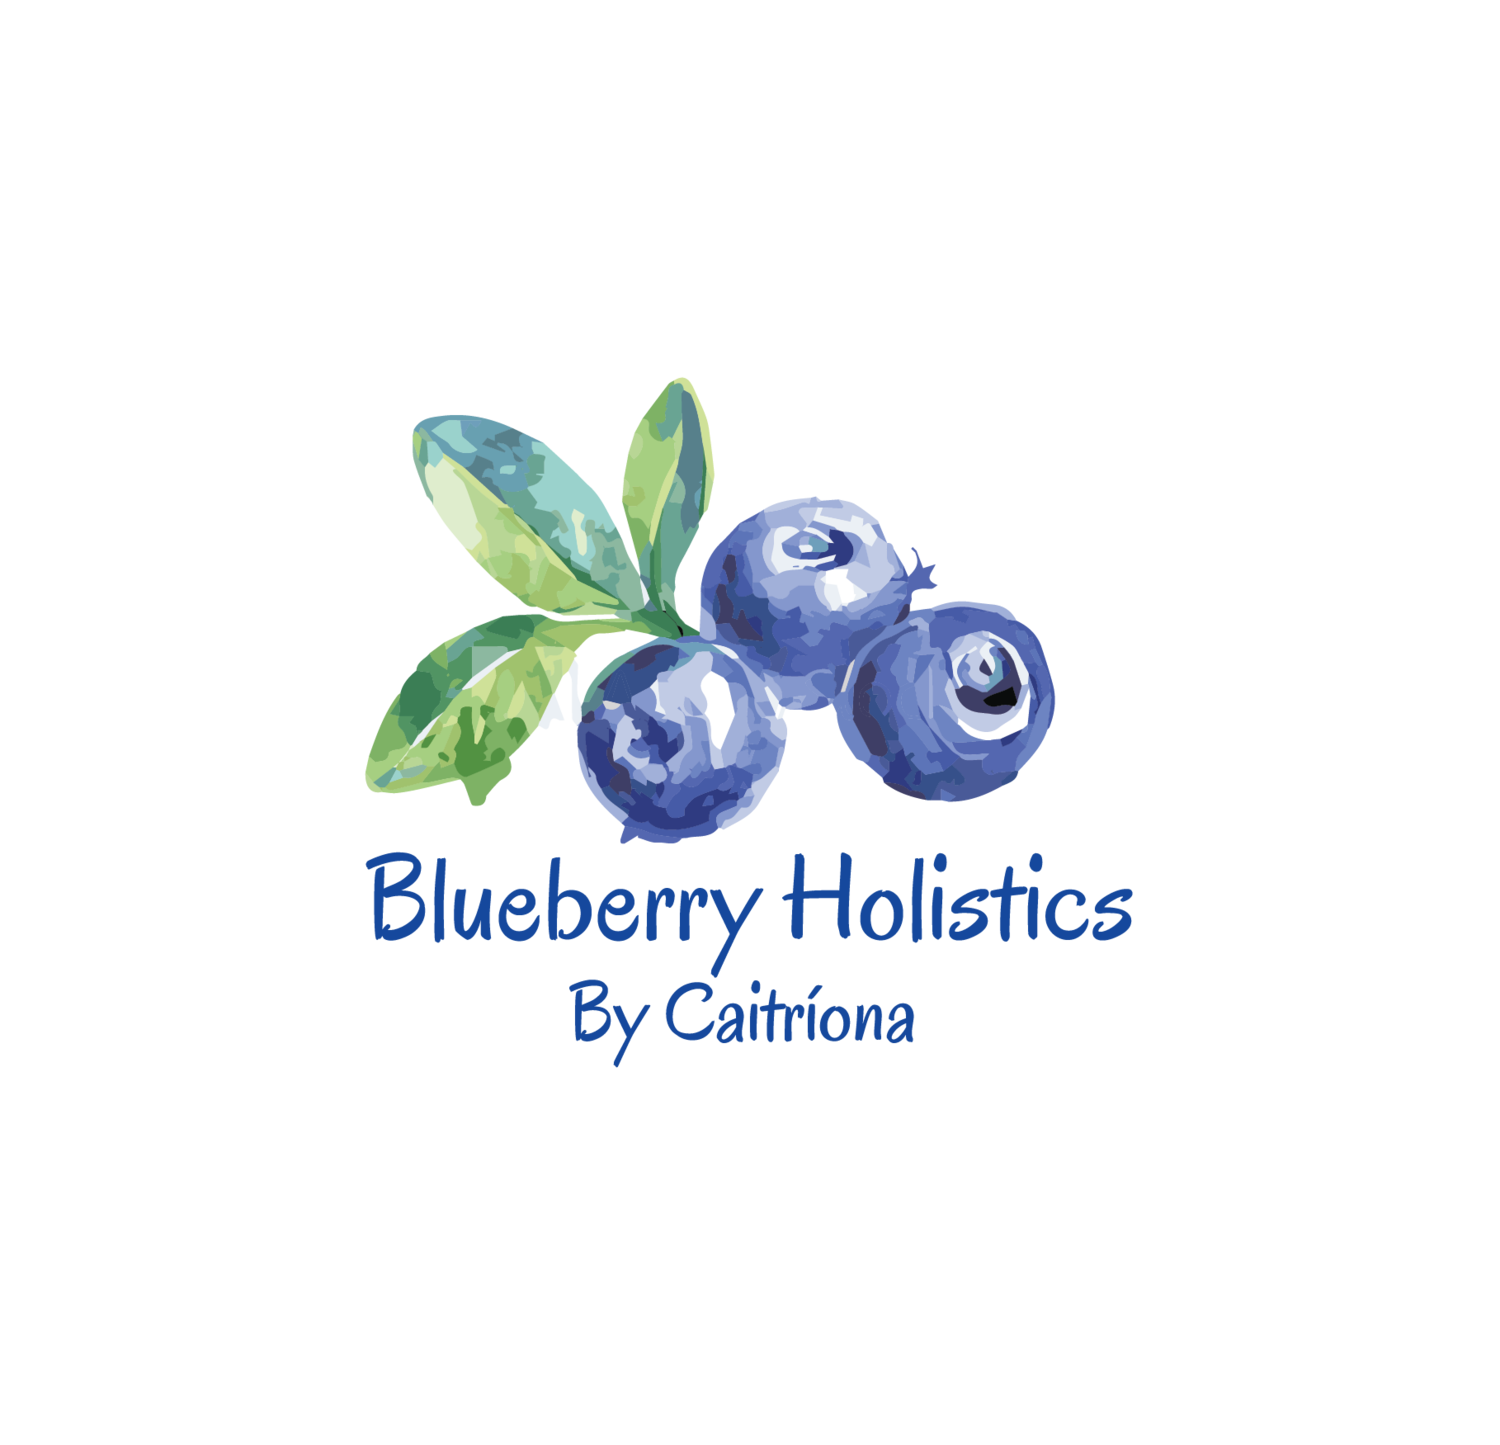 Blueberry Holistics